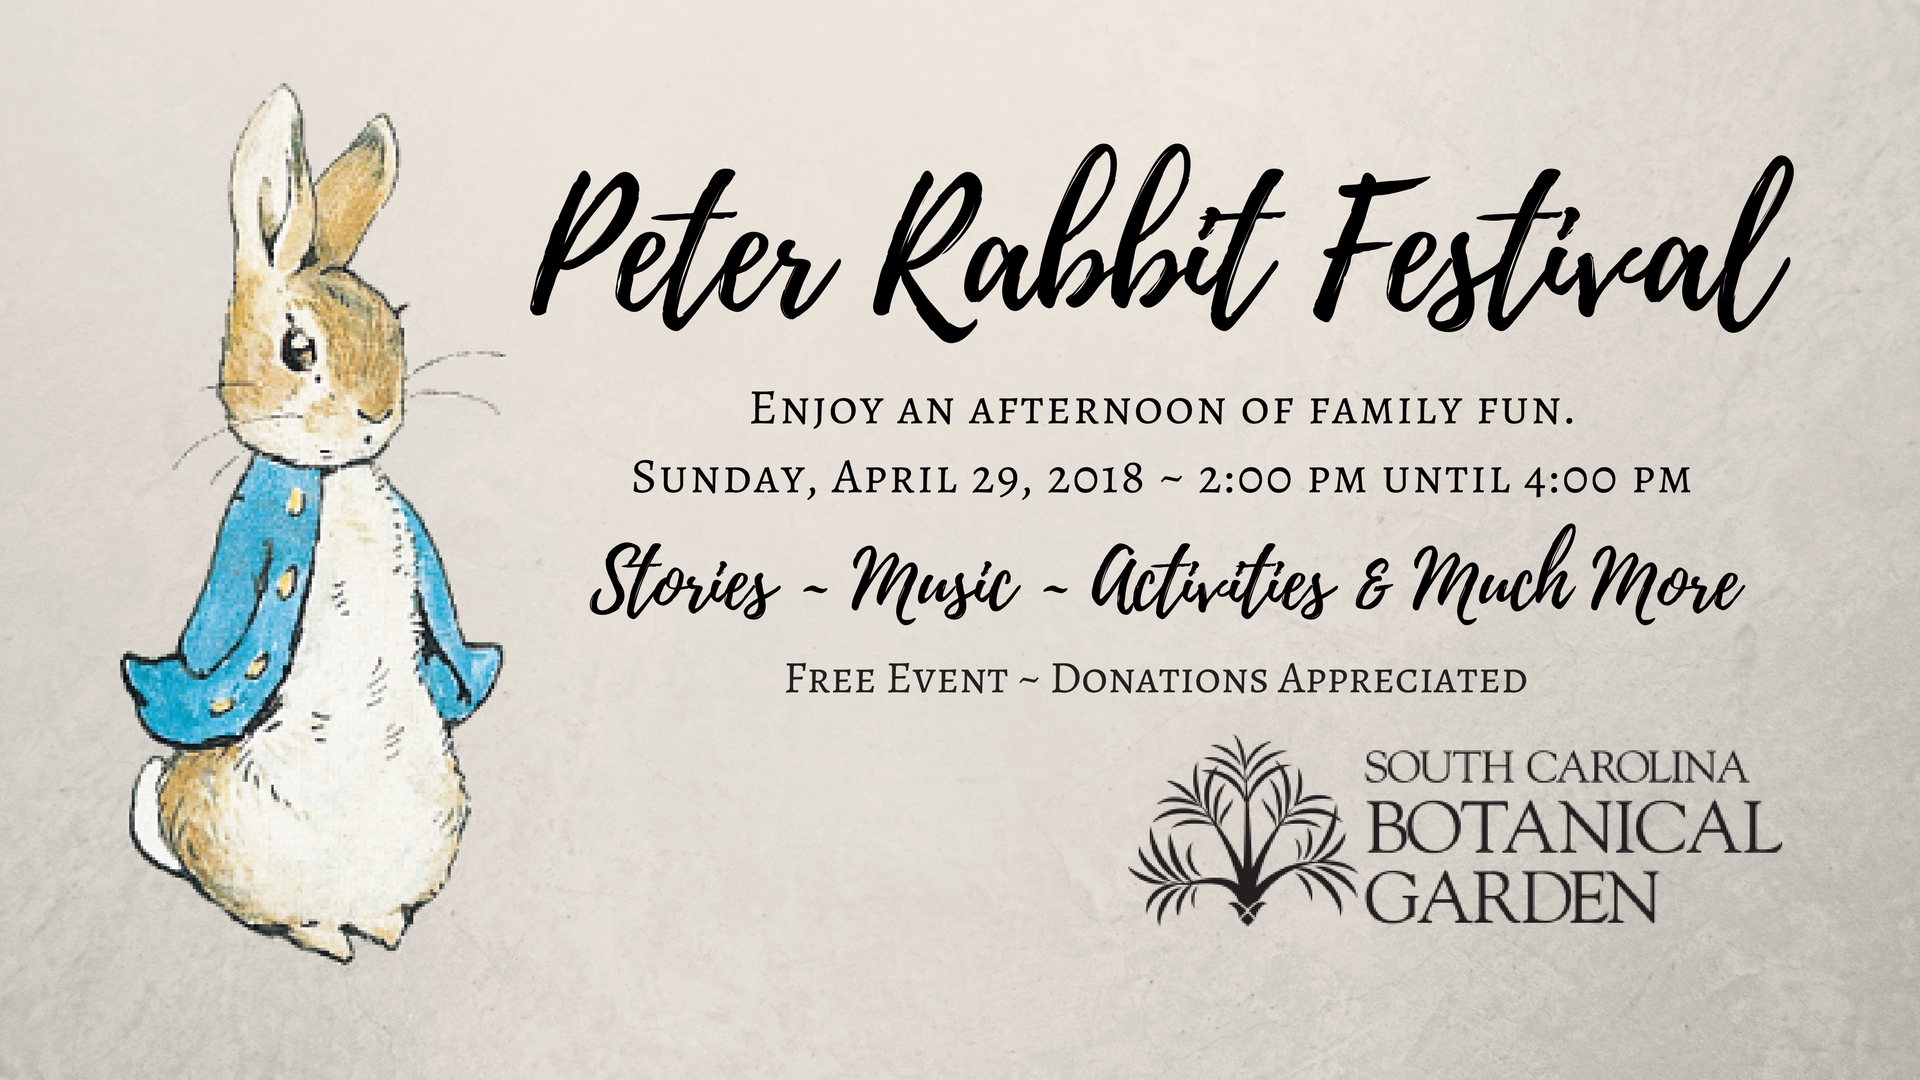 Peter Rabbit Festival April 29th 2018, 2pm to 4pm